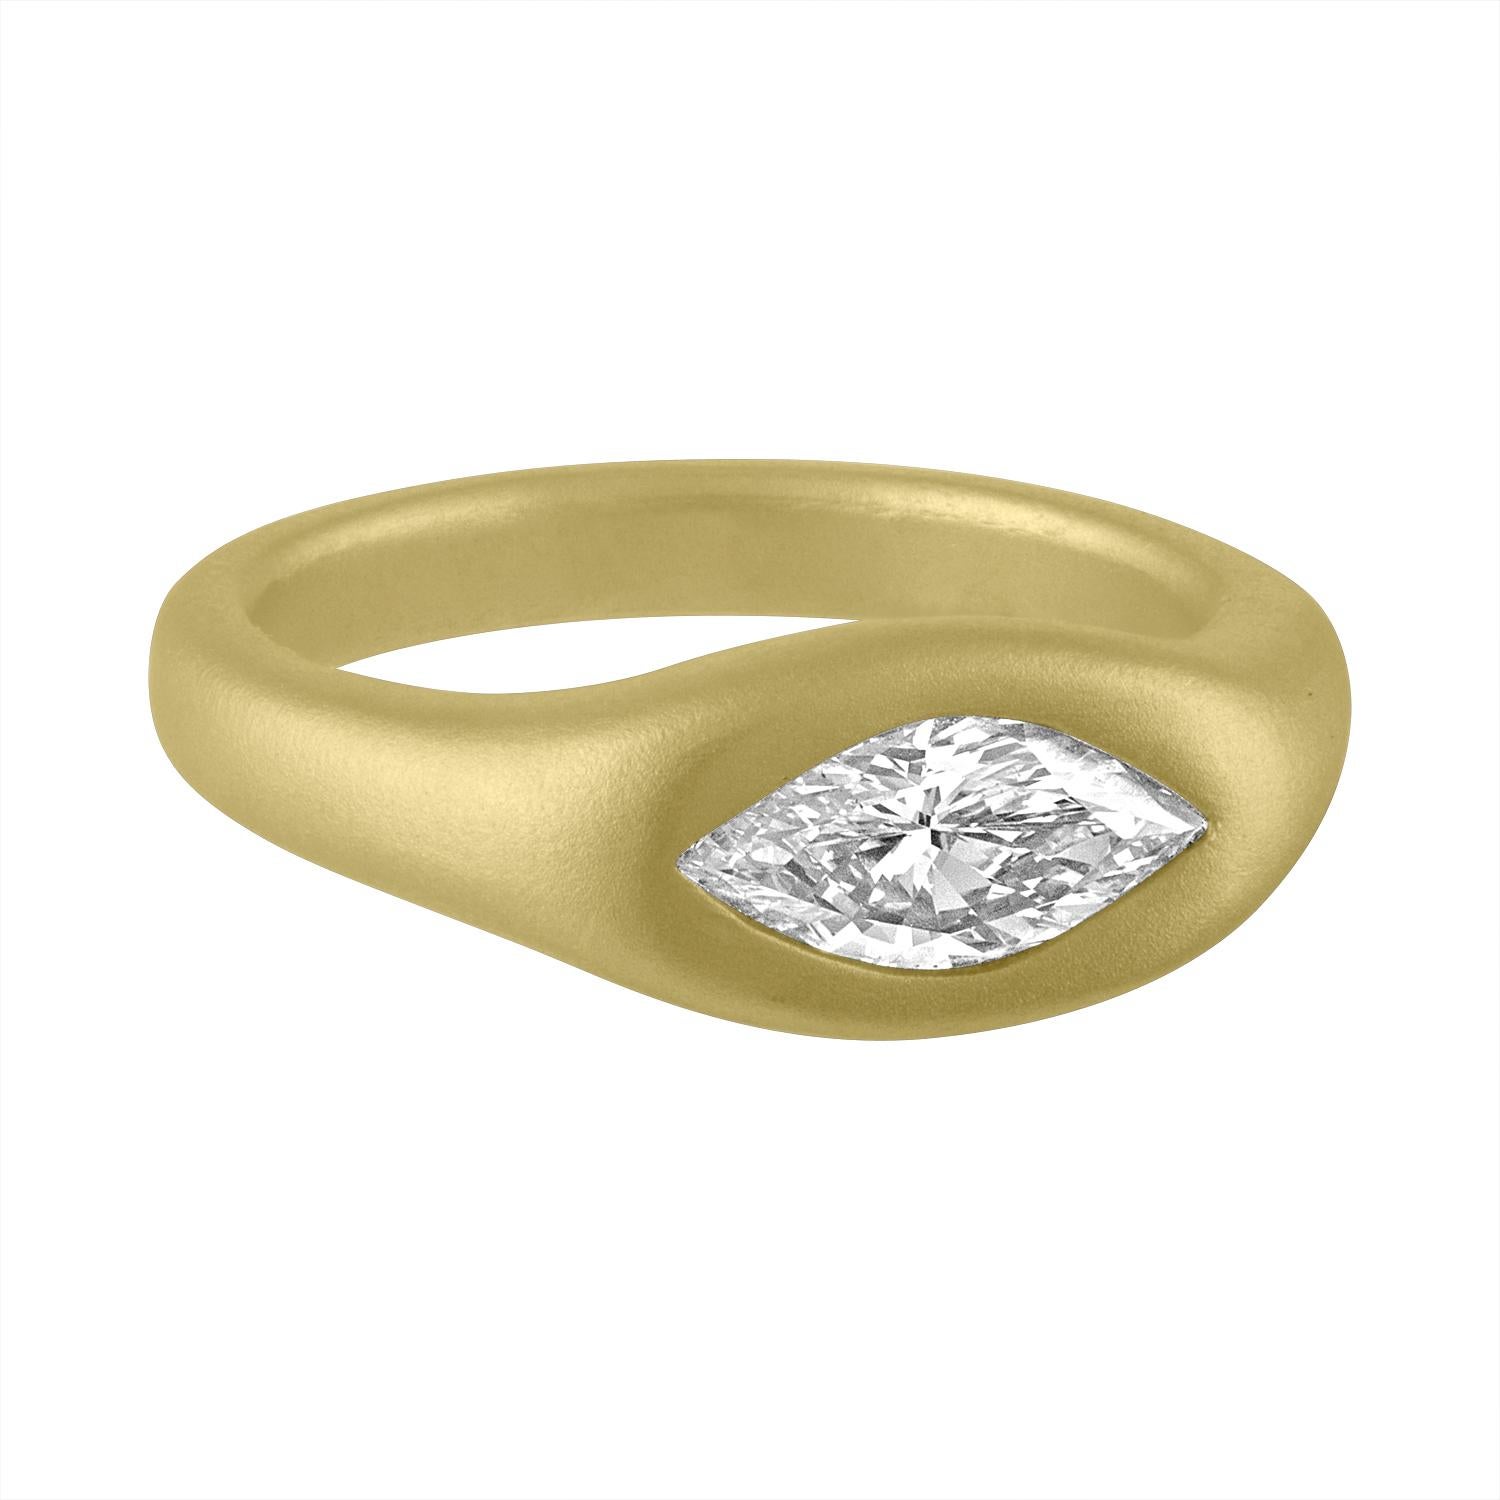 18k Green Gold Diamond Ring
Diamond weight 1.00ct
Size 6 3/4 